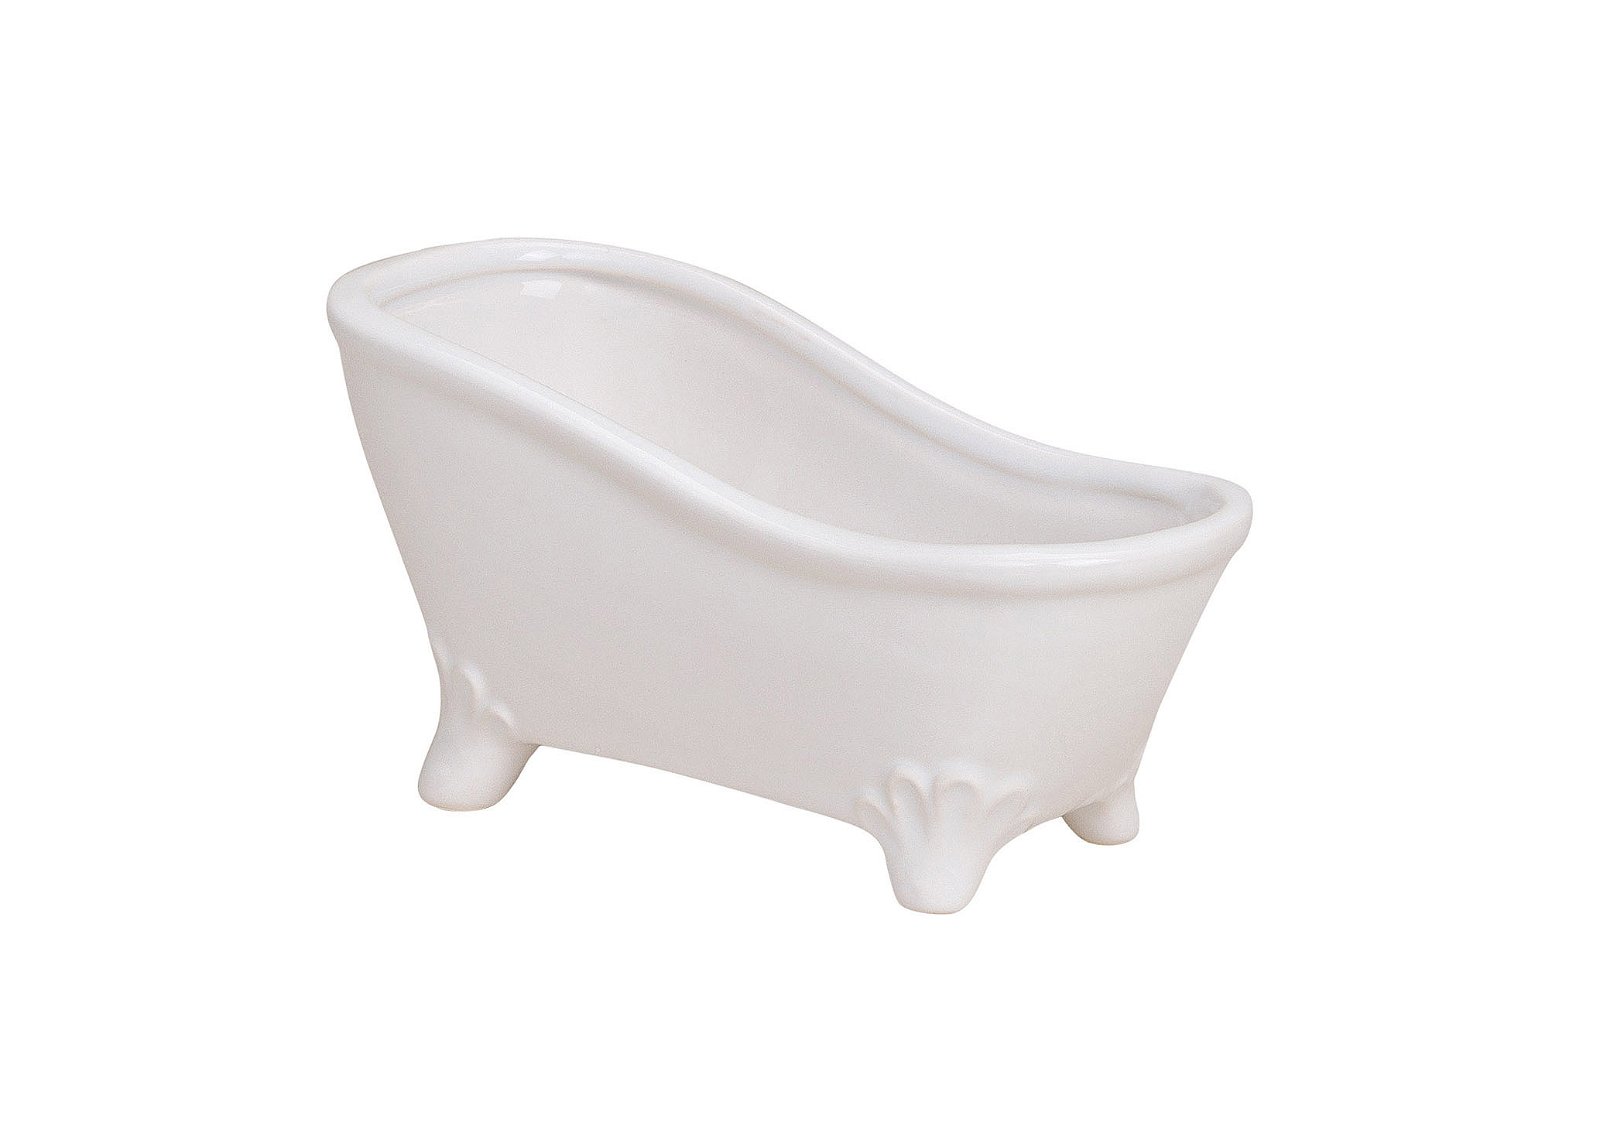 Bath tub white ceramic 16x7x9 cm